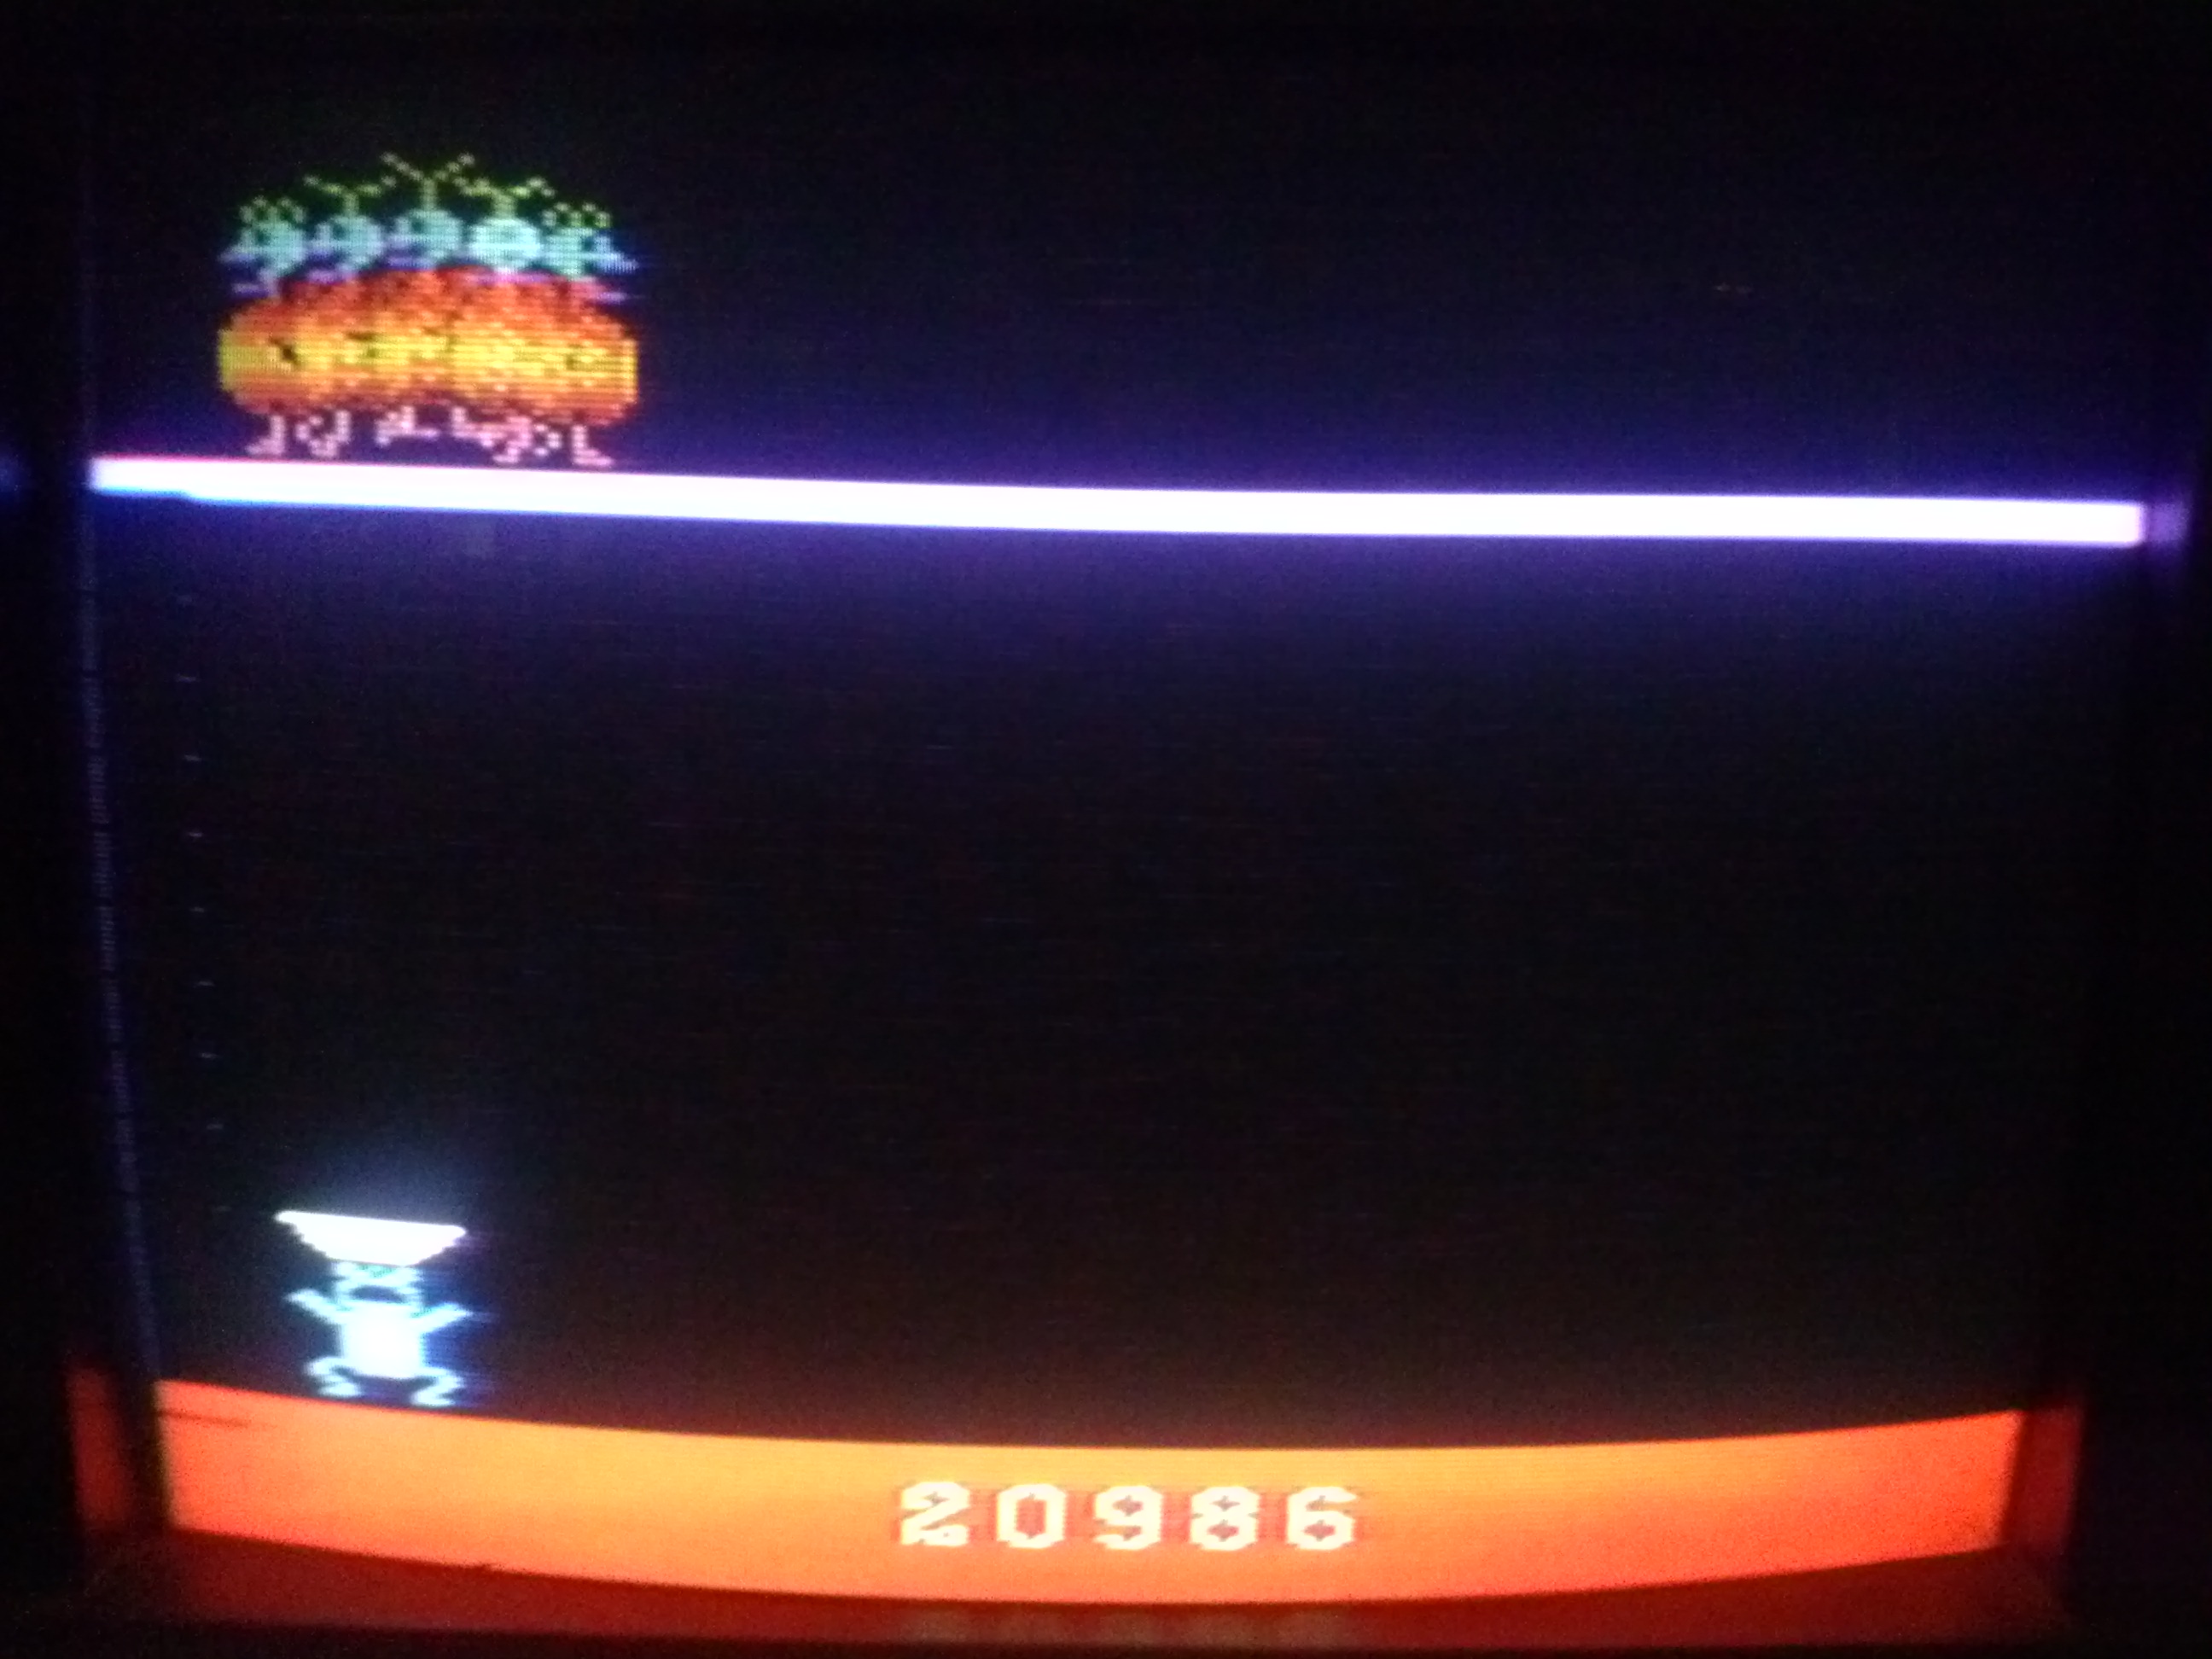 boot-error: Eggomania (Atari 2600 Novice/B) 20,986 points on 2014-05-16 20:22:13